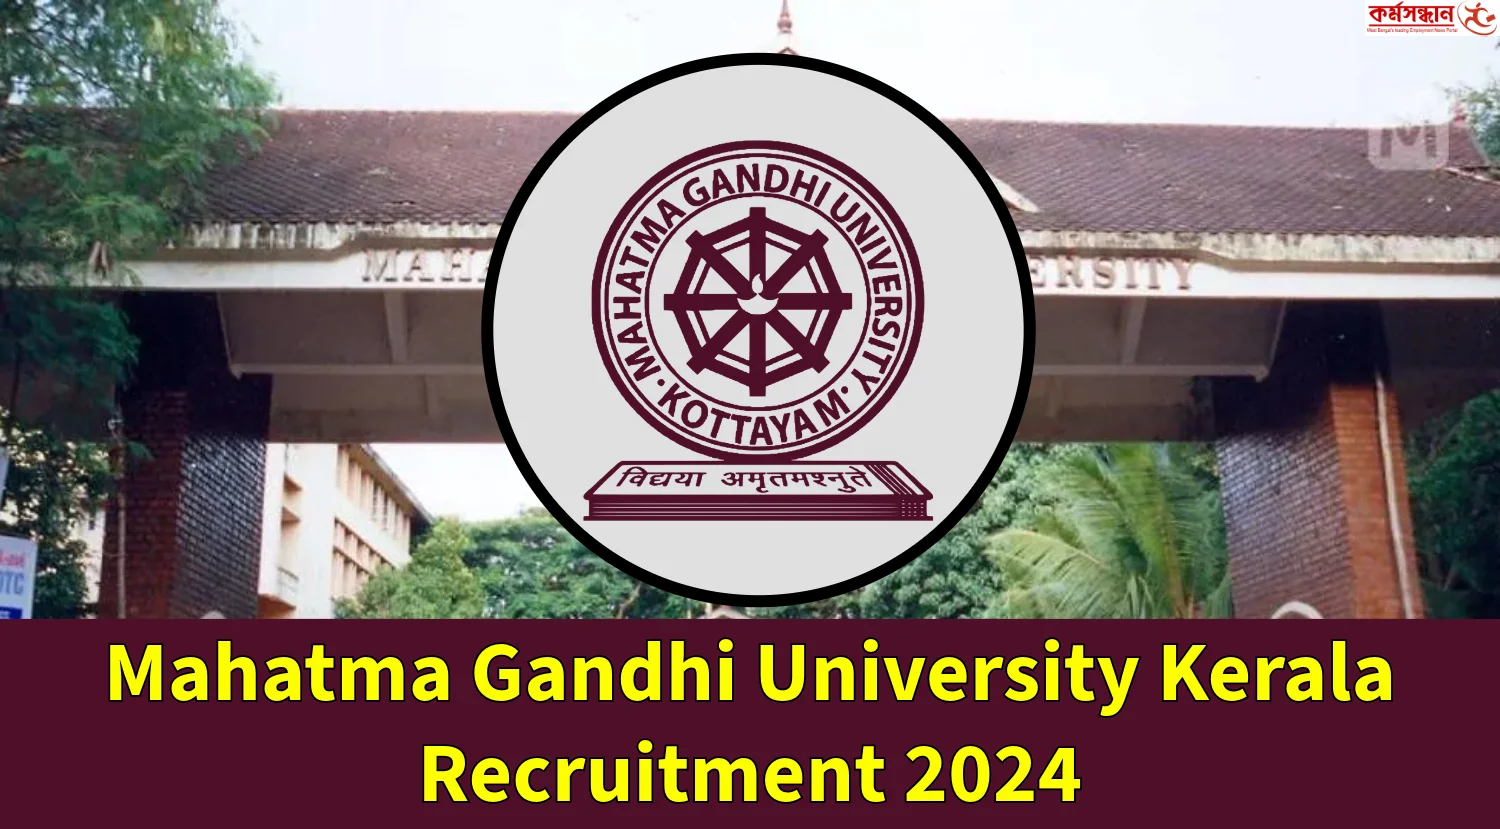 Mahatma Gandhi University Kerala Recruitment 2024